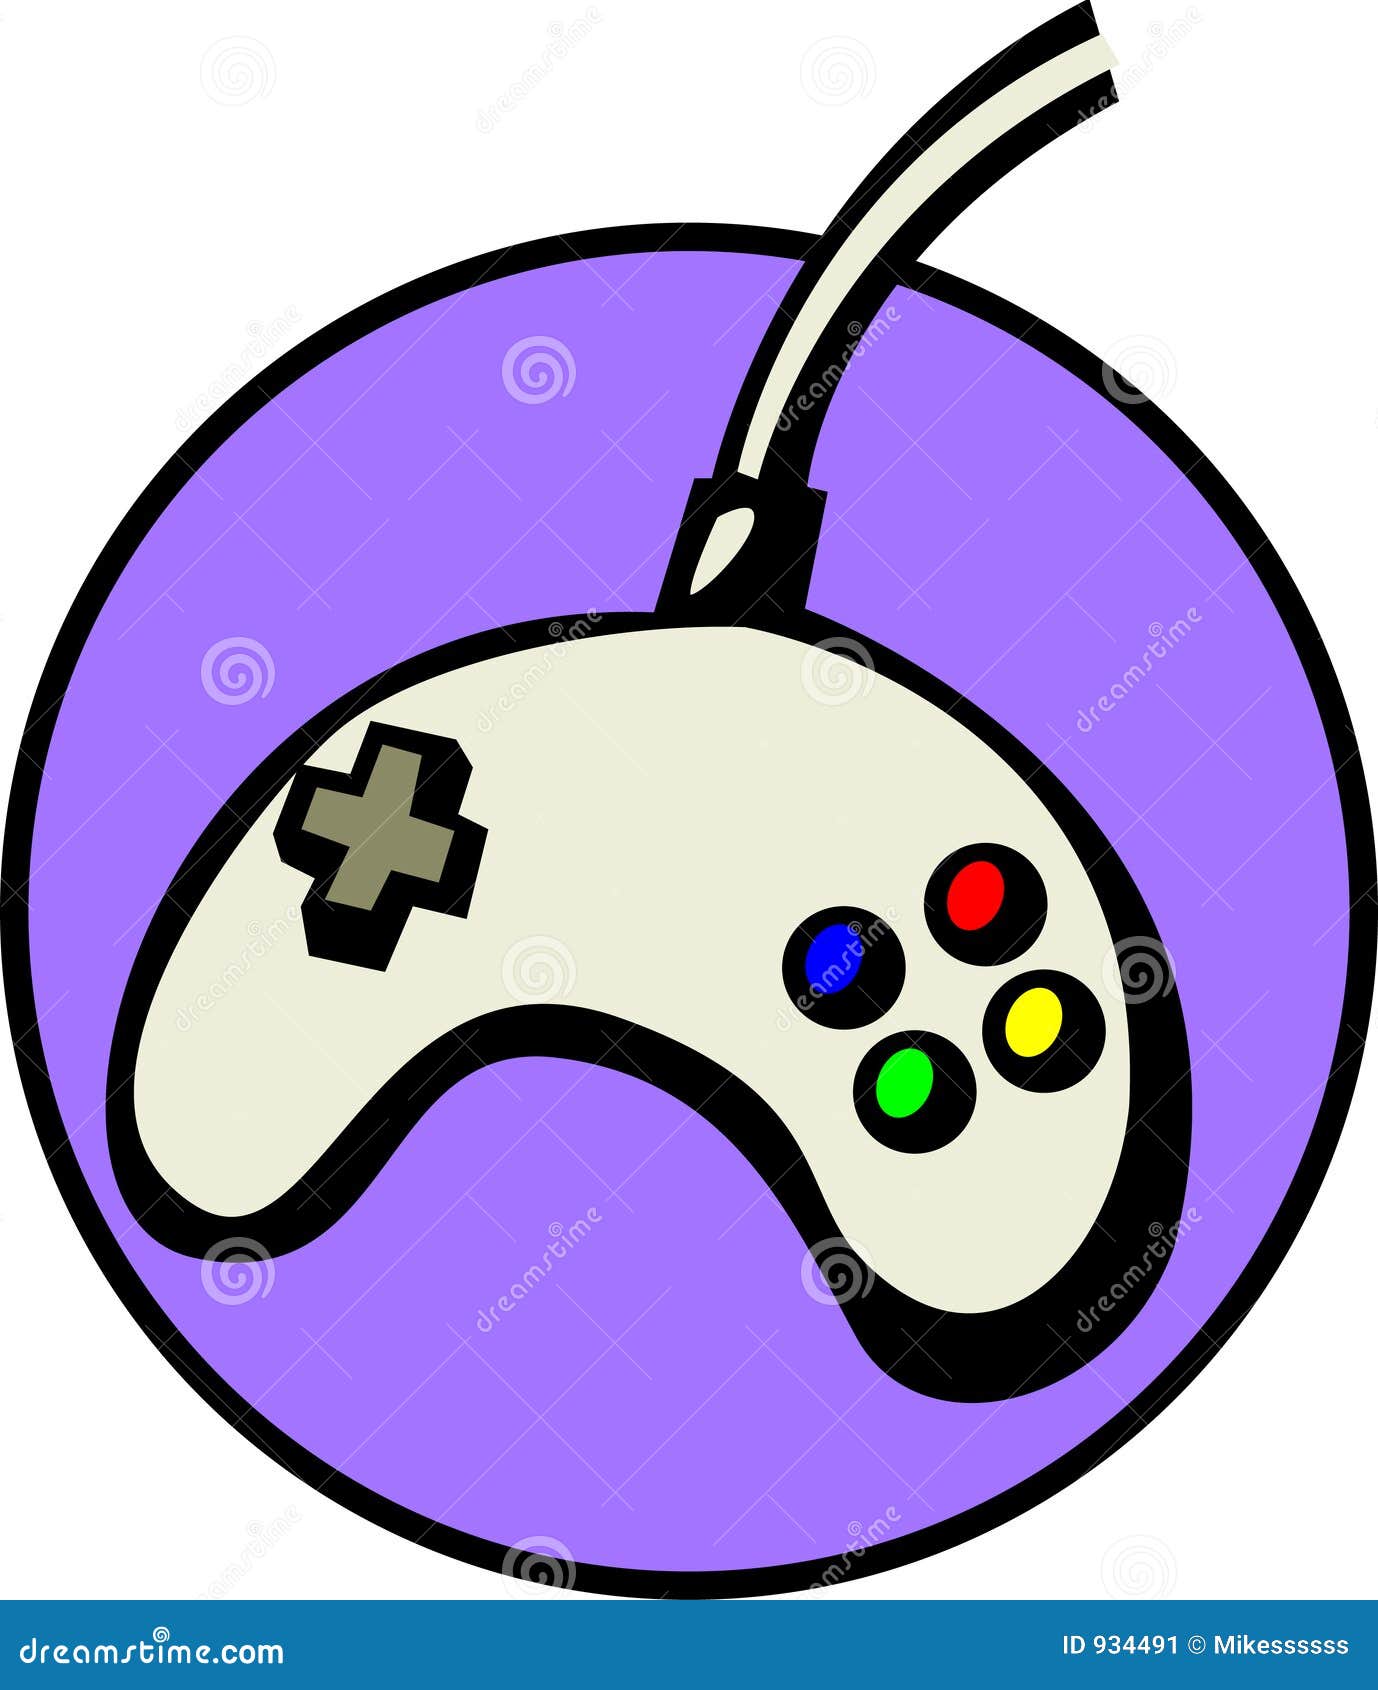 clip art of video game controller - photo #32